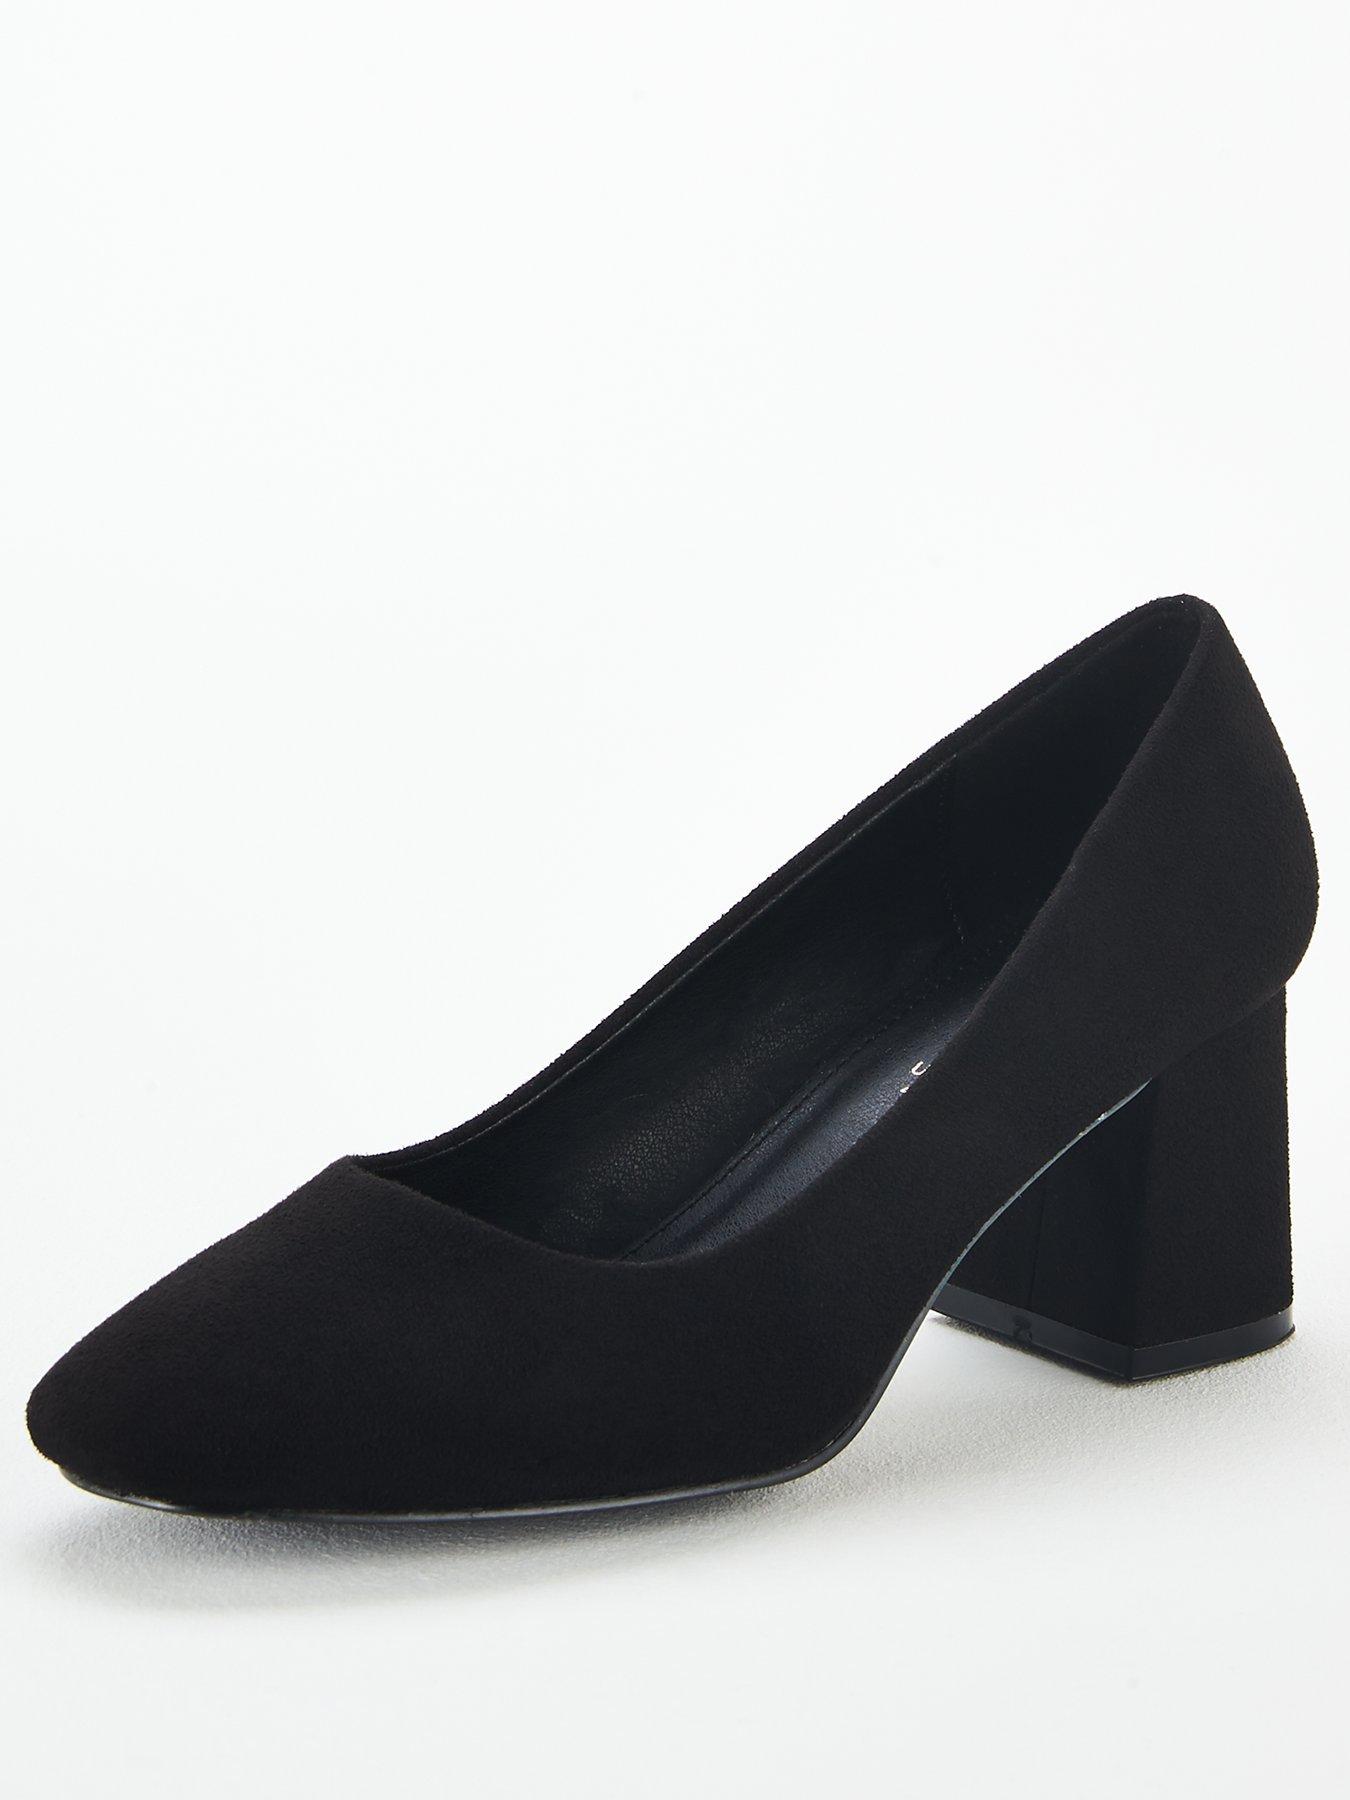 low black heels